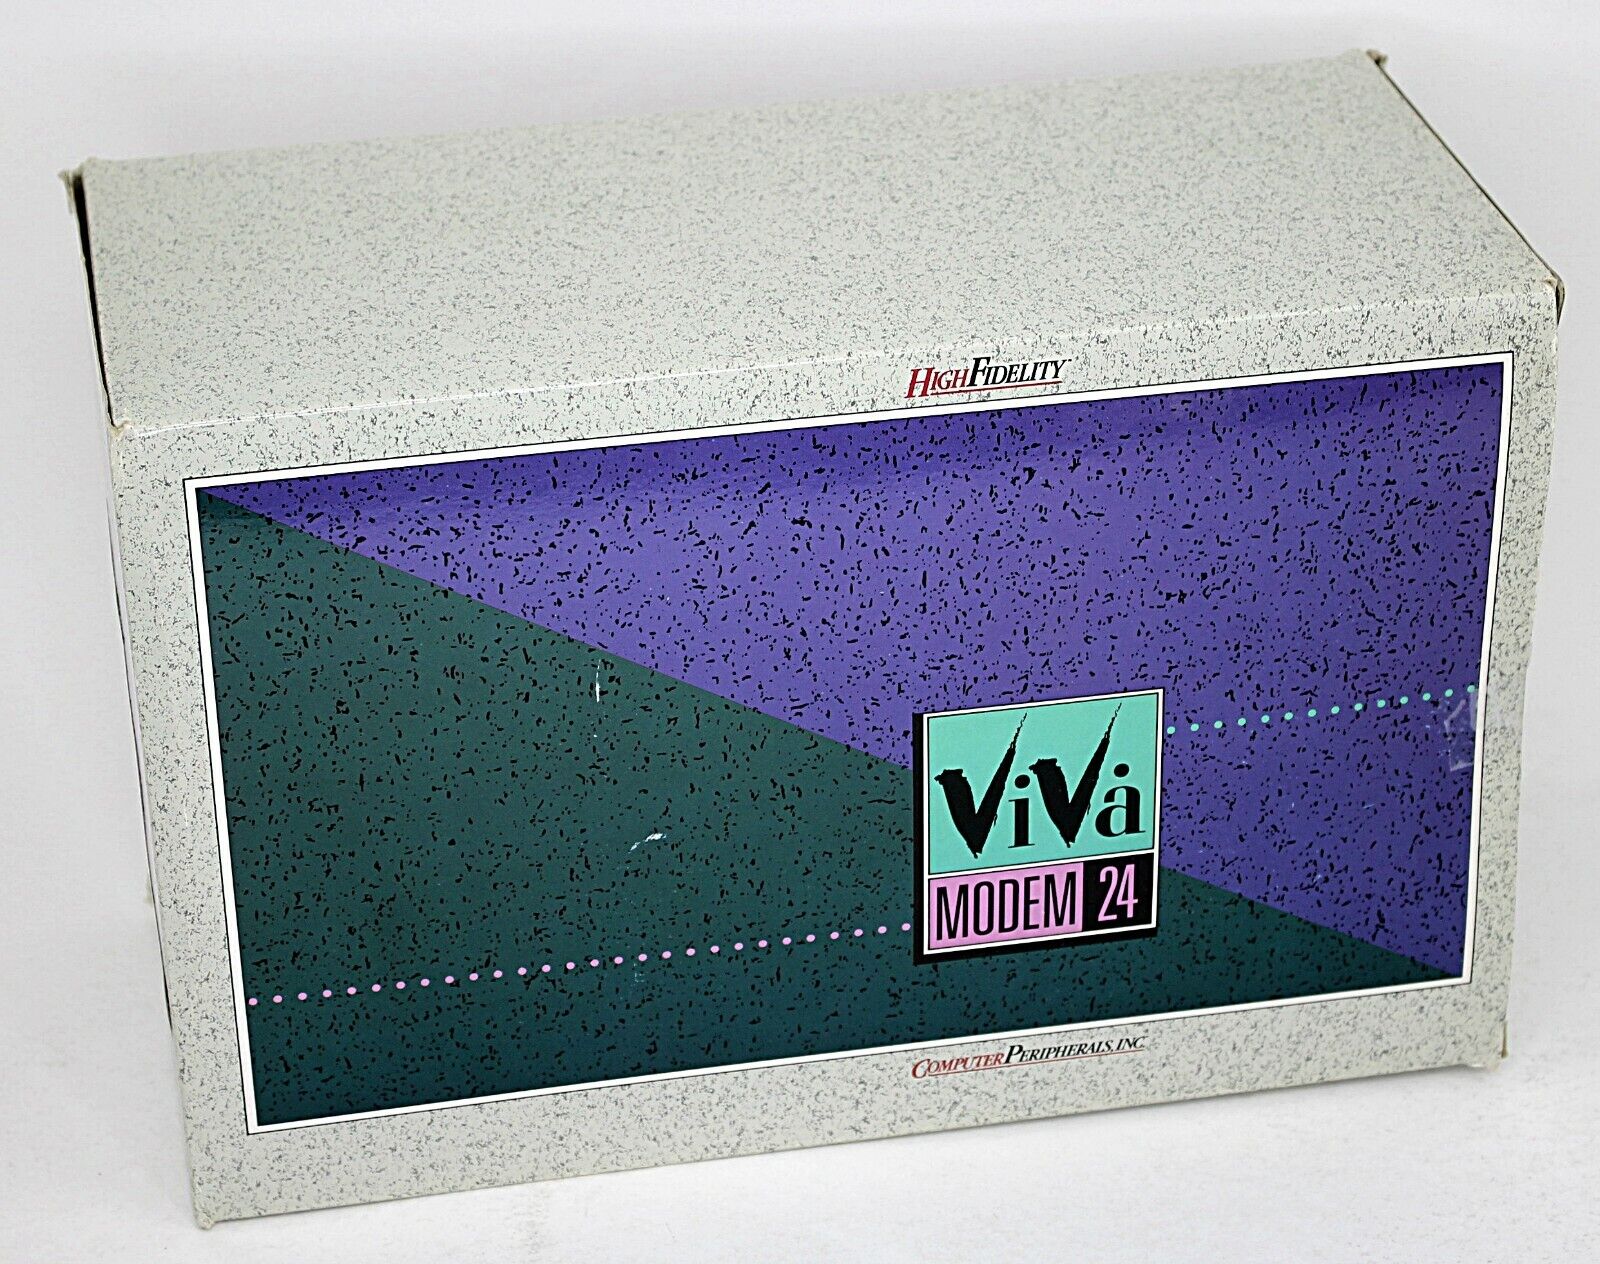 Computer Peripherals VIVA MODEM 24fx External Modem with SendFax 44-502504-000